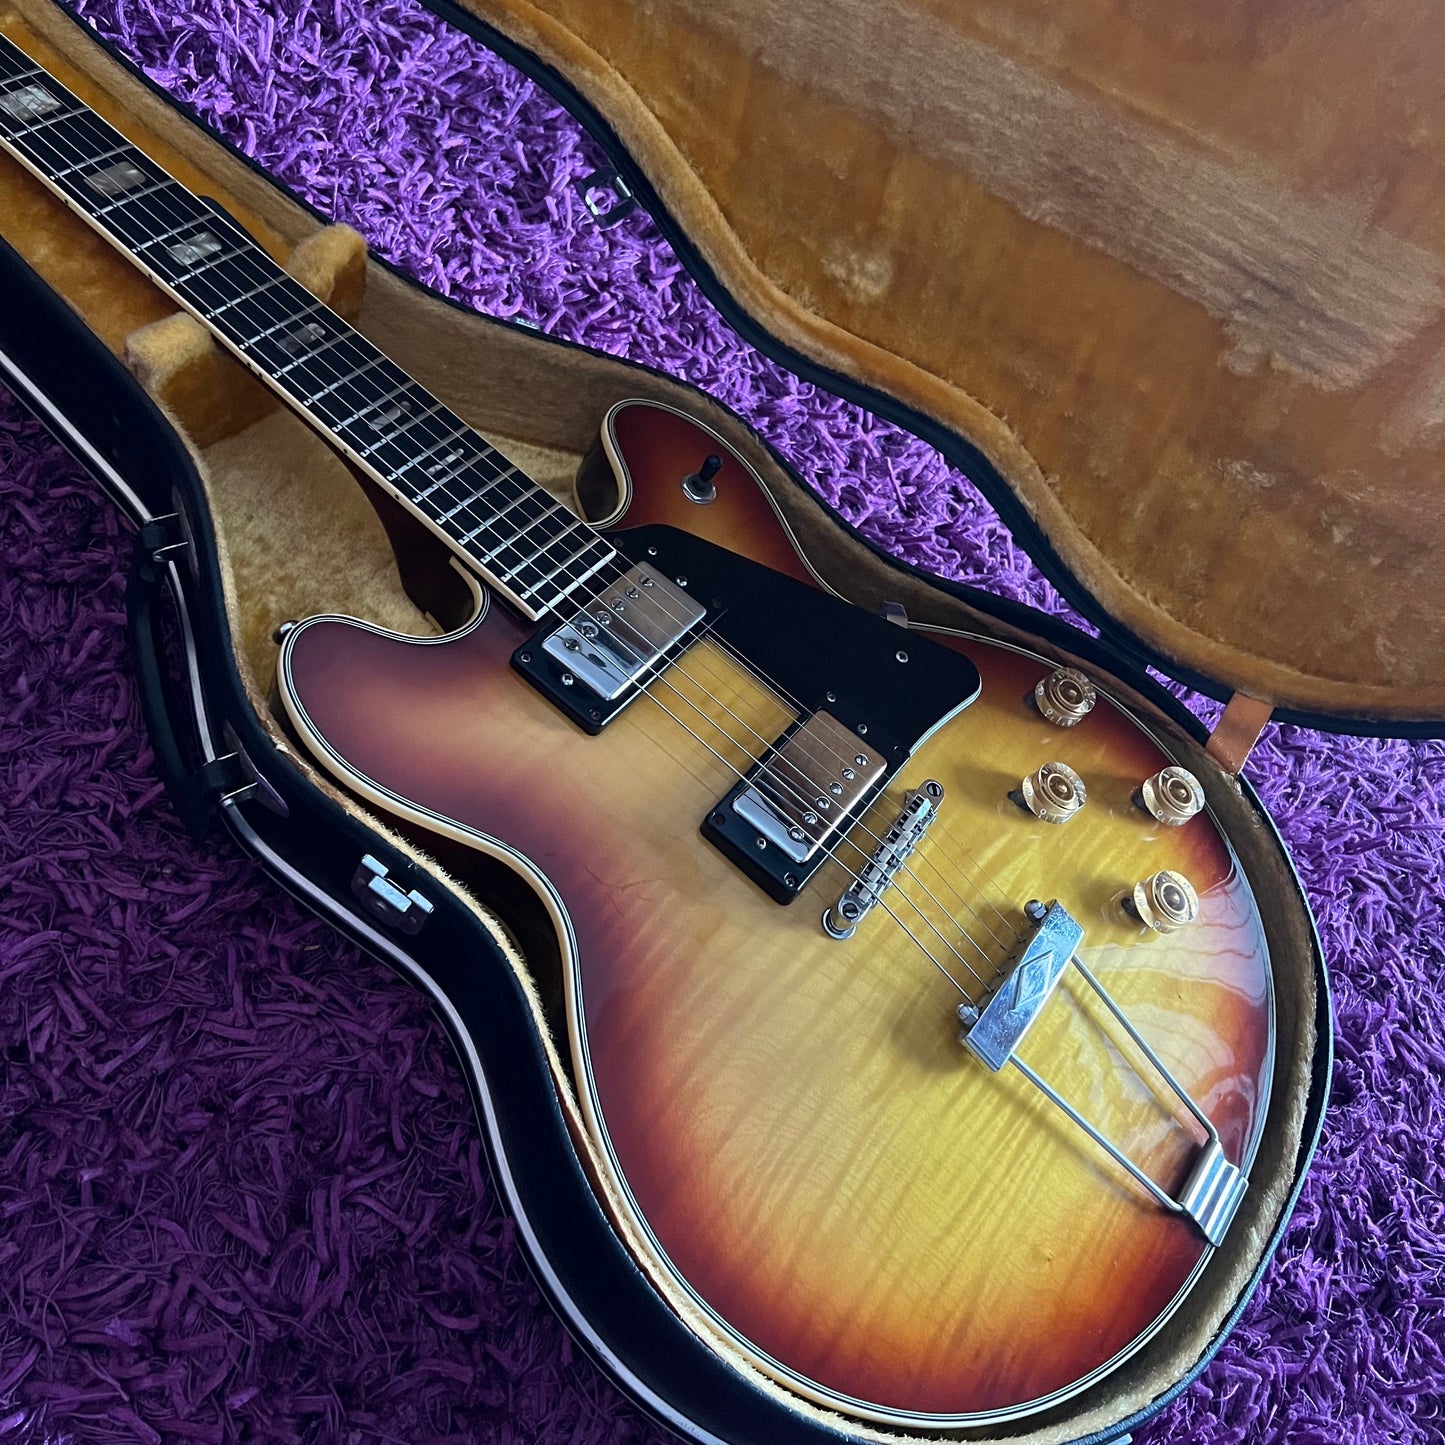 Greco SA-500 ES-339 Style Hollow Body Guitar (1974 MIJ)